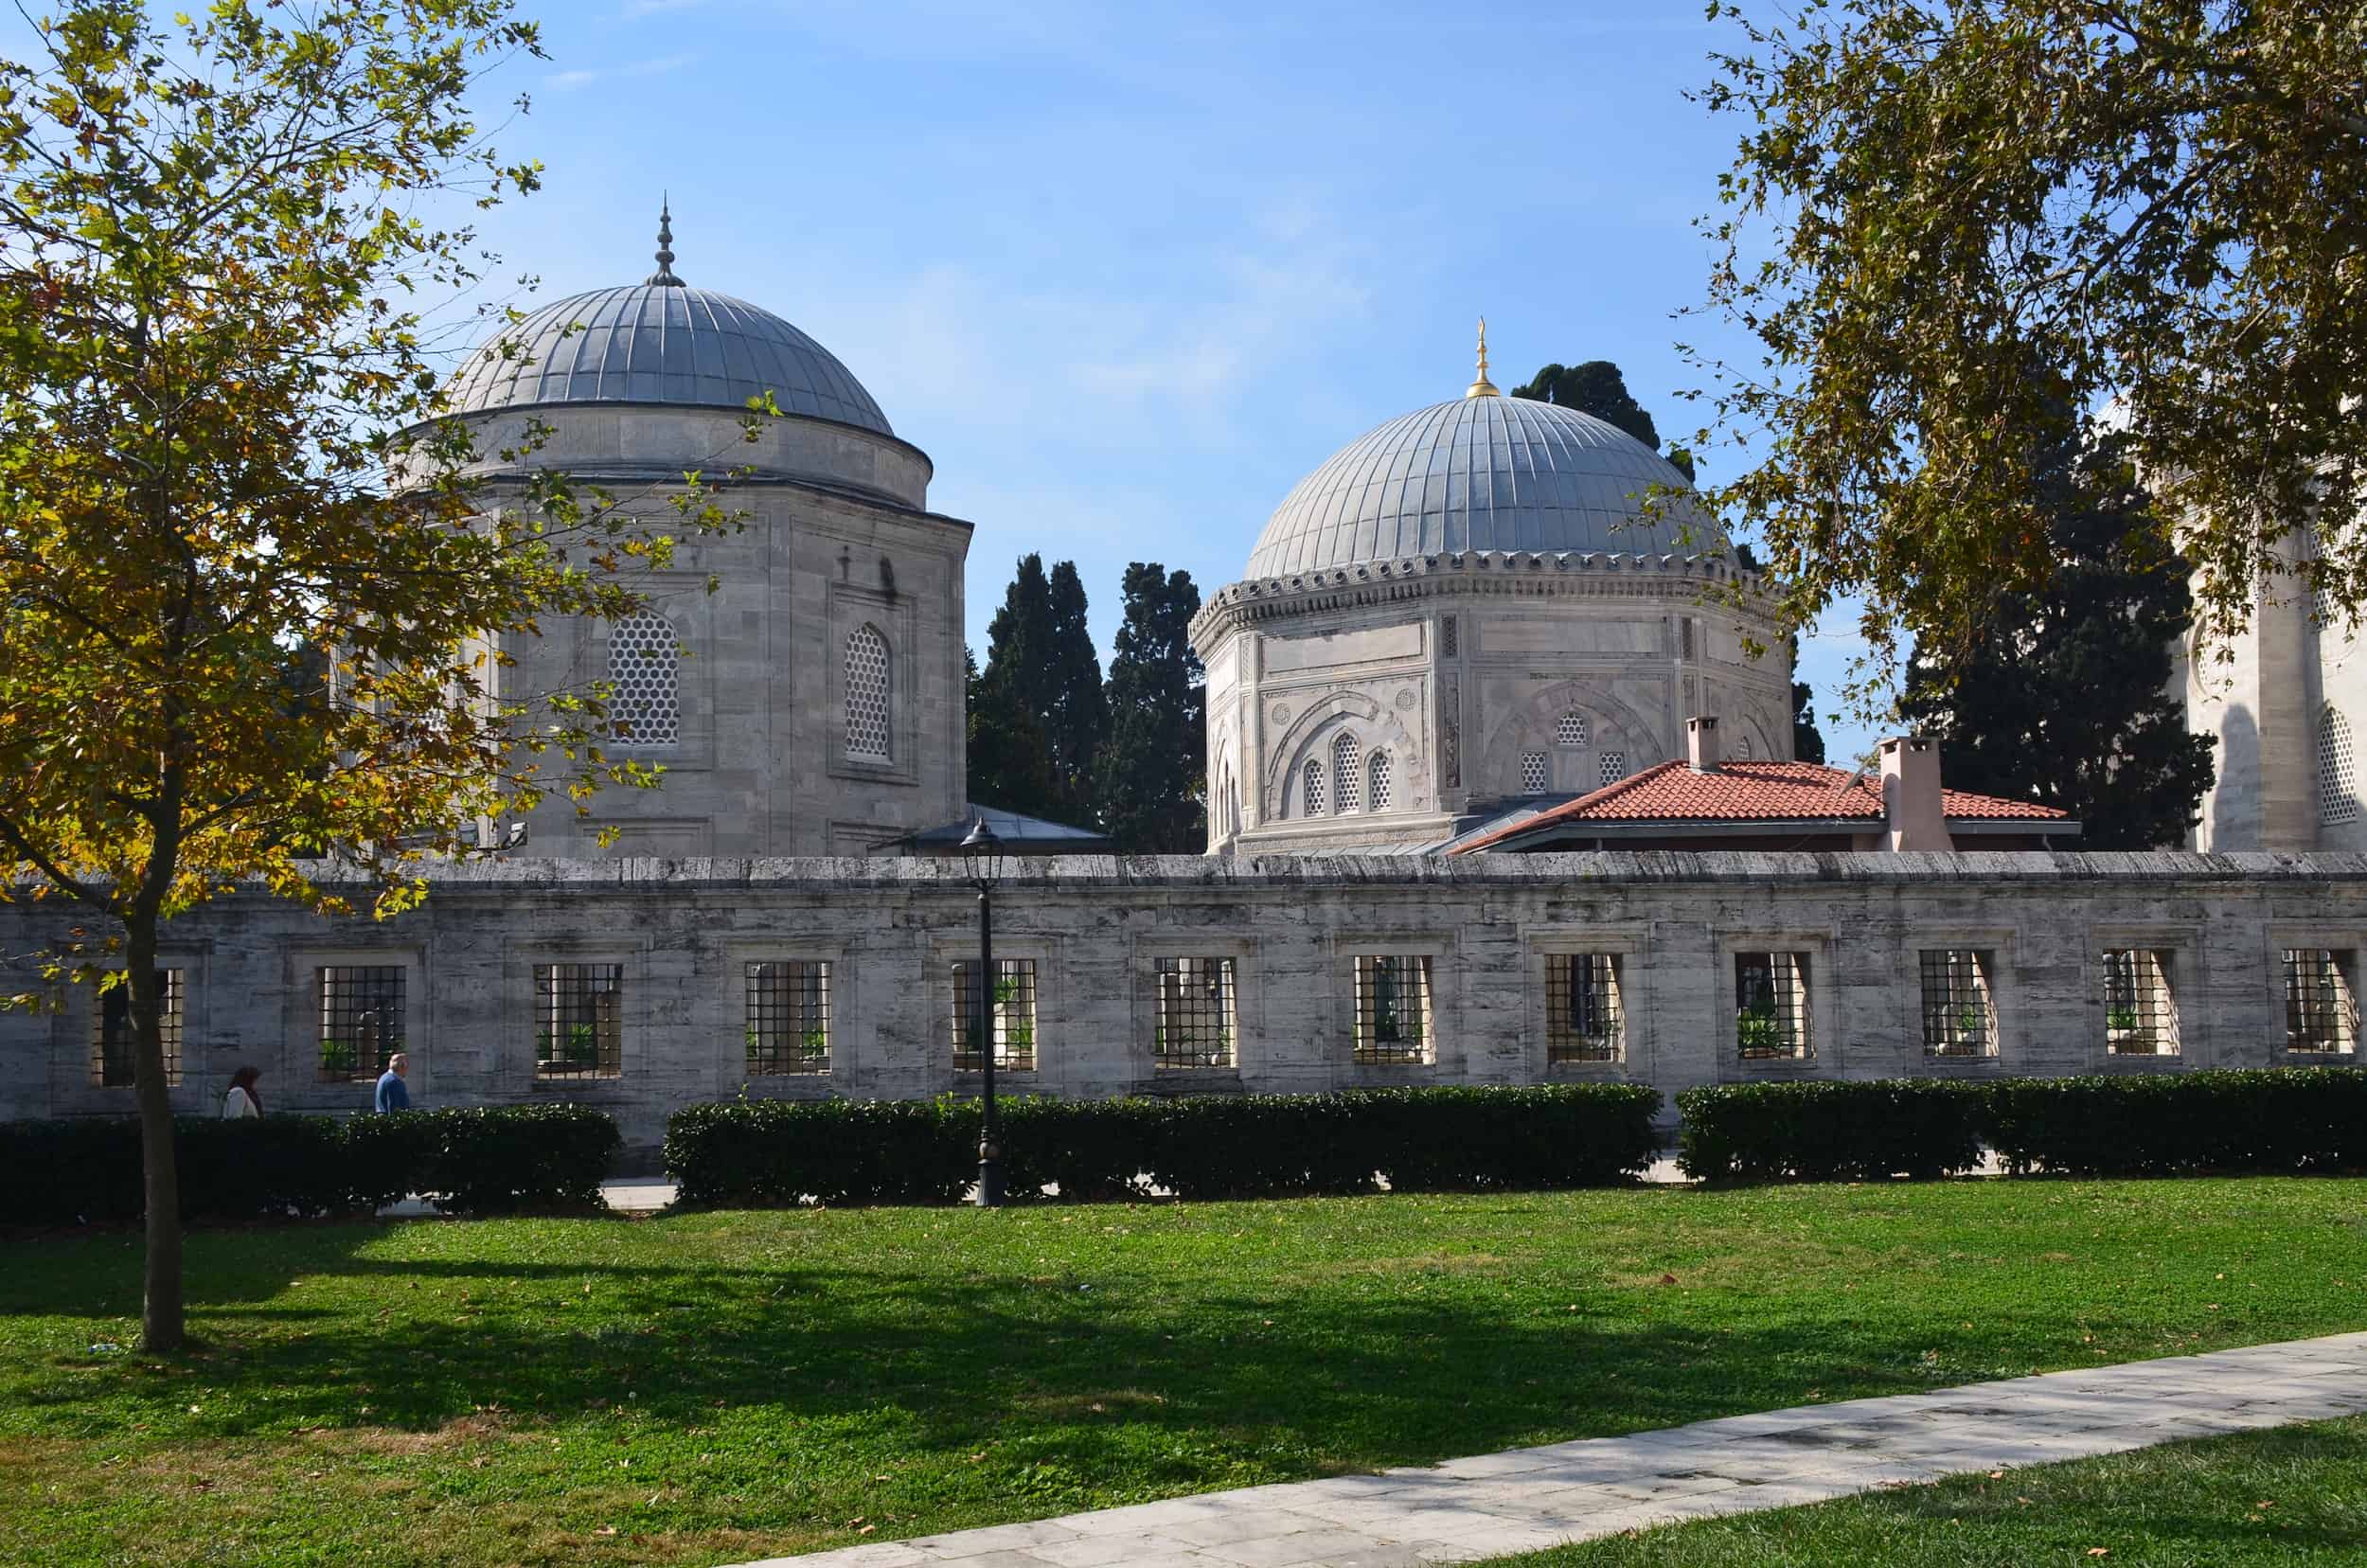 Tombs at Süleymaniye Mosque in Istanbul, Turkey